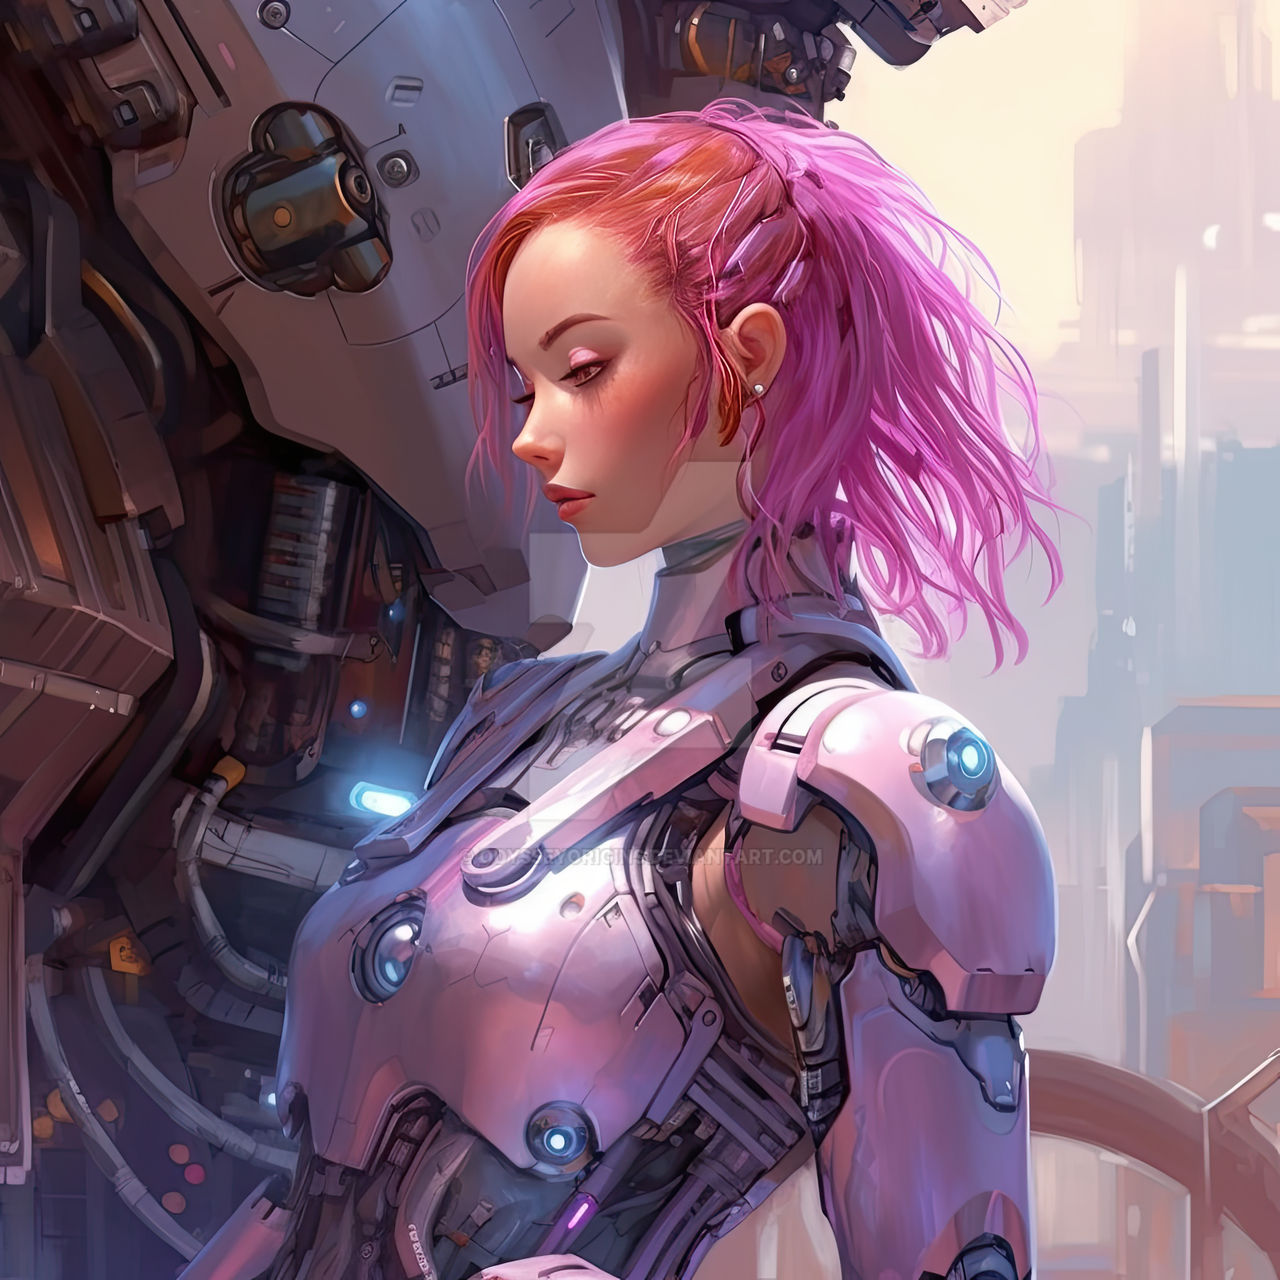 Beauty in Duality: Cyborg Maiden's Transcendent by OdysseyOrigins on  DeviantArt